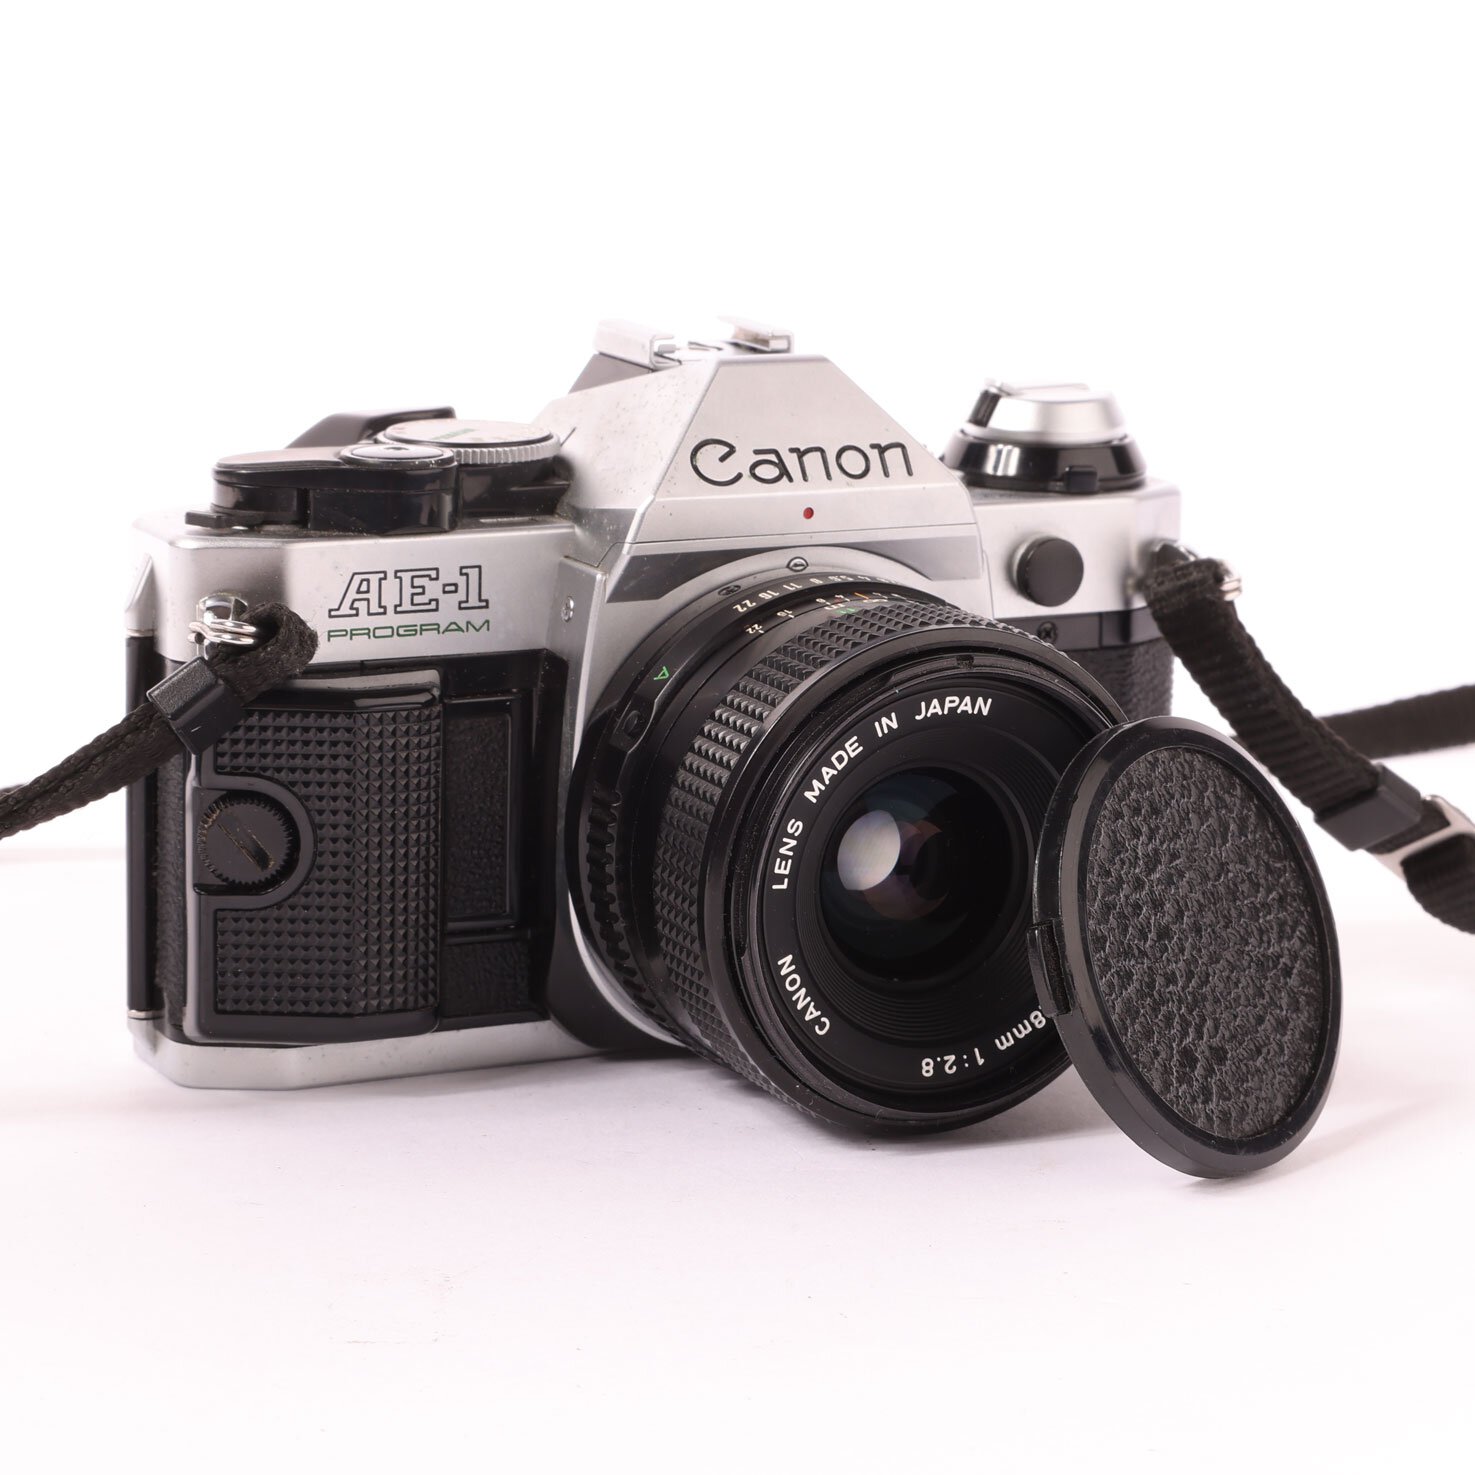 Canon AE 1 Programm 2.8/28mm